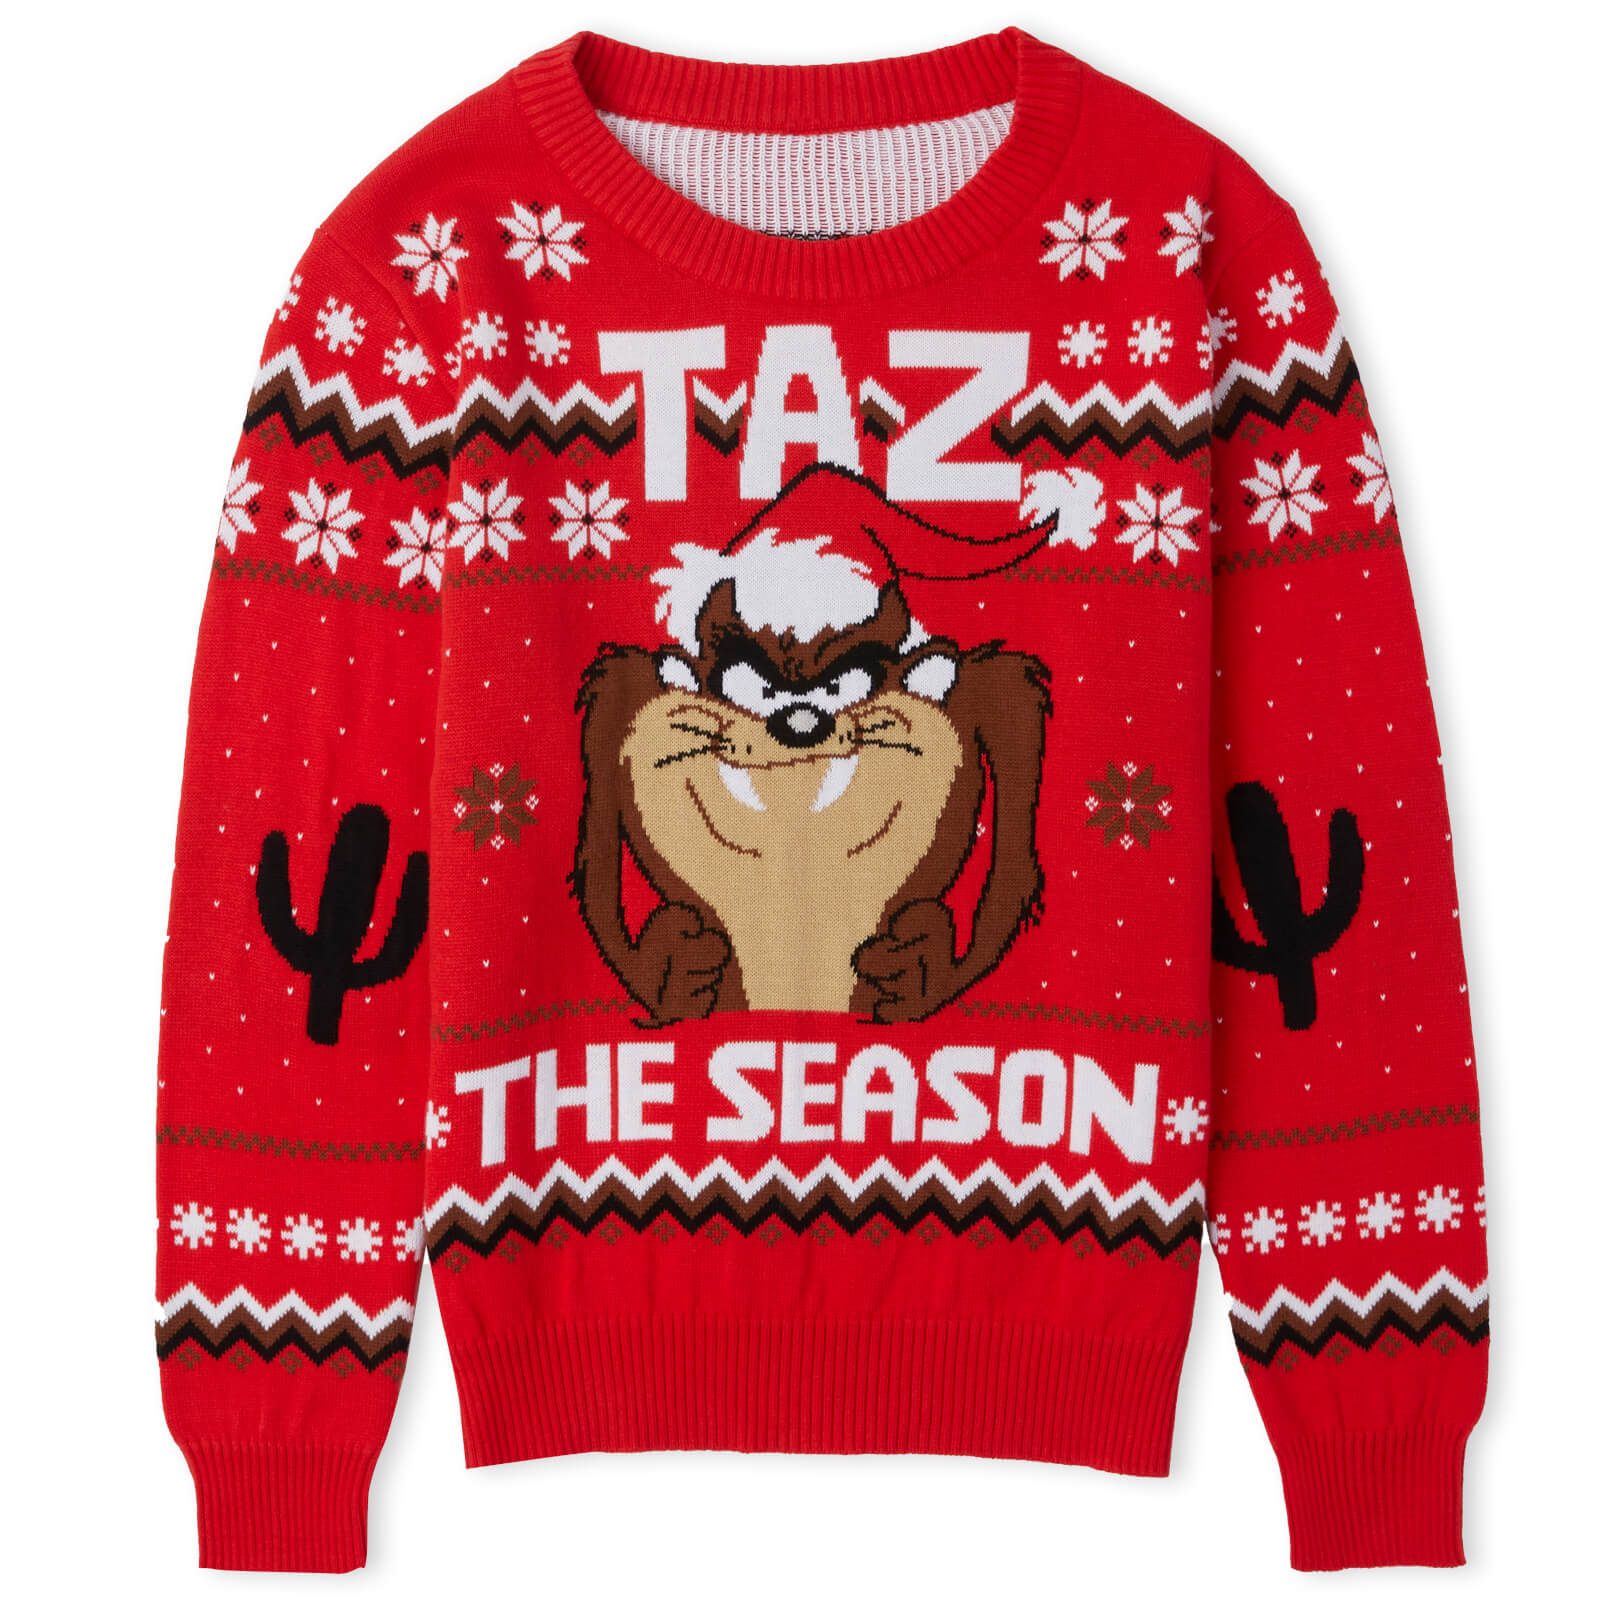 Taz the Season Christmas Kids Knitted Jumper Red - M